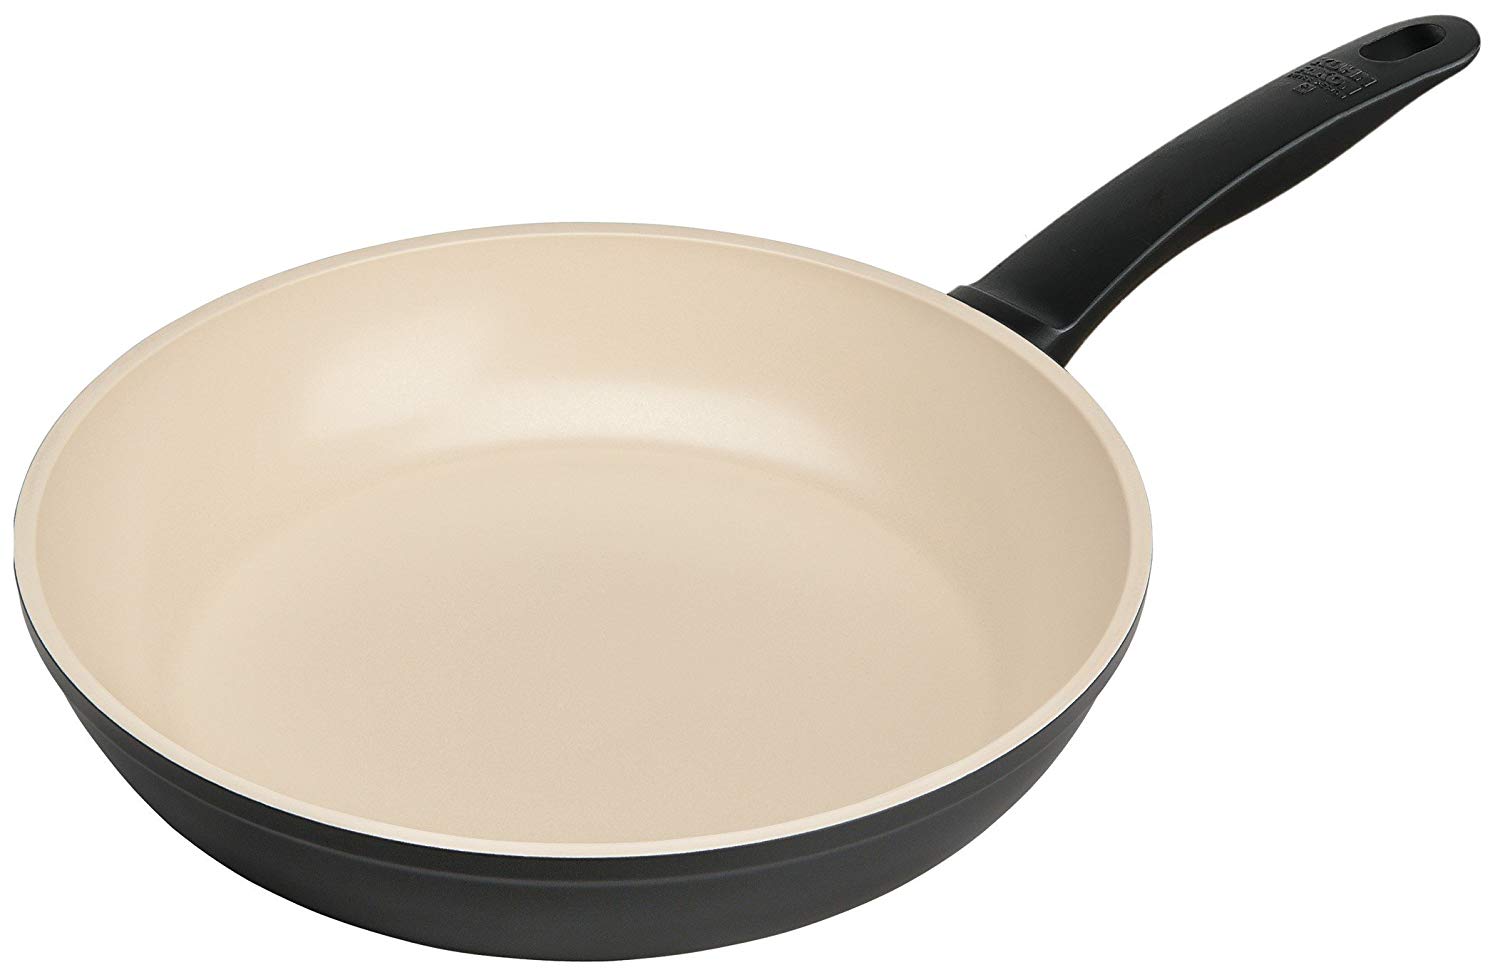 Kuhn Rikon 20 Cm Easy Ceramic Induction Frying Pan, Black